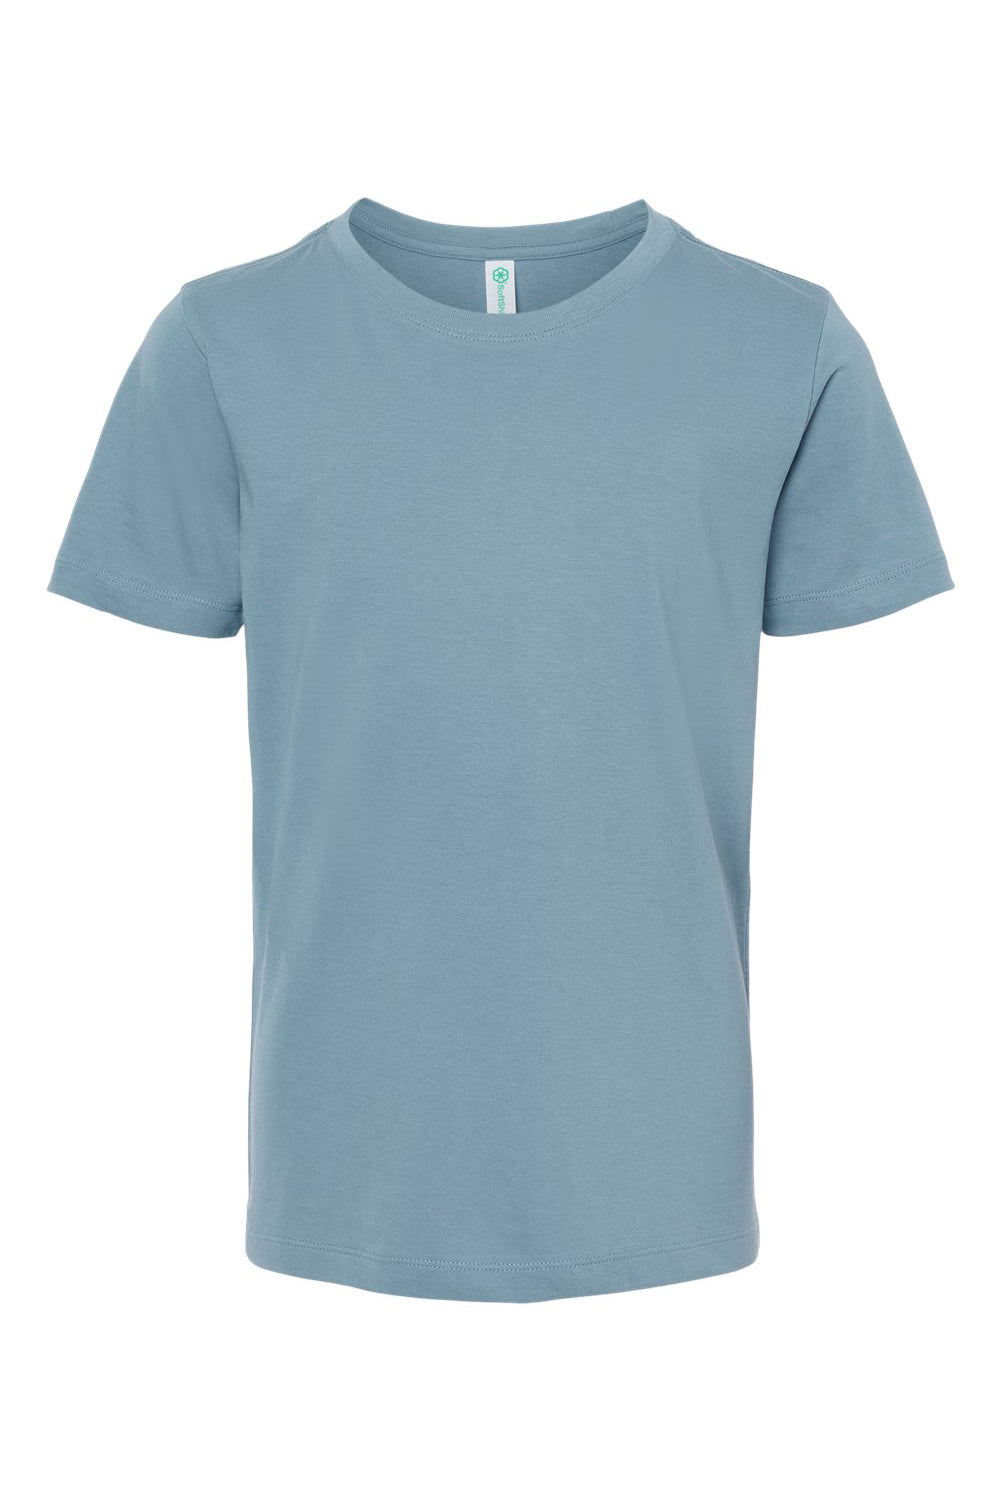 SoftShirts 402 Youth Organic Short Sleeve Crewneck T-Shirt Slate Blue Flat Front